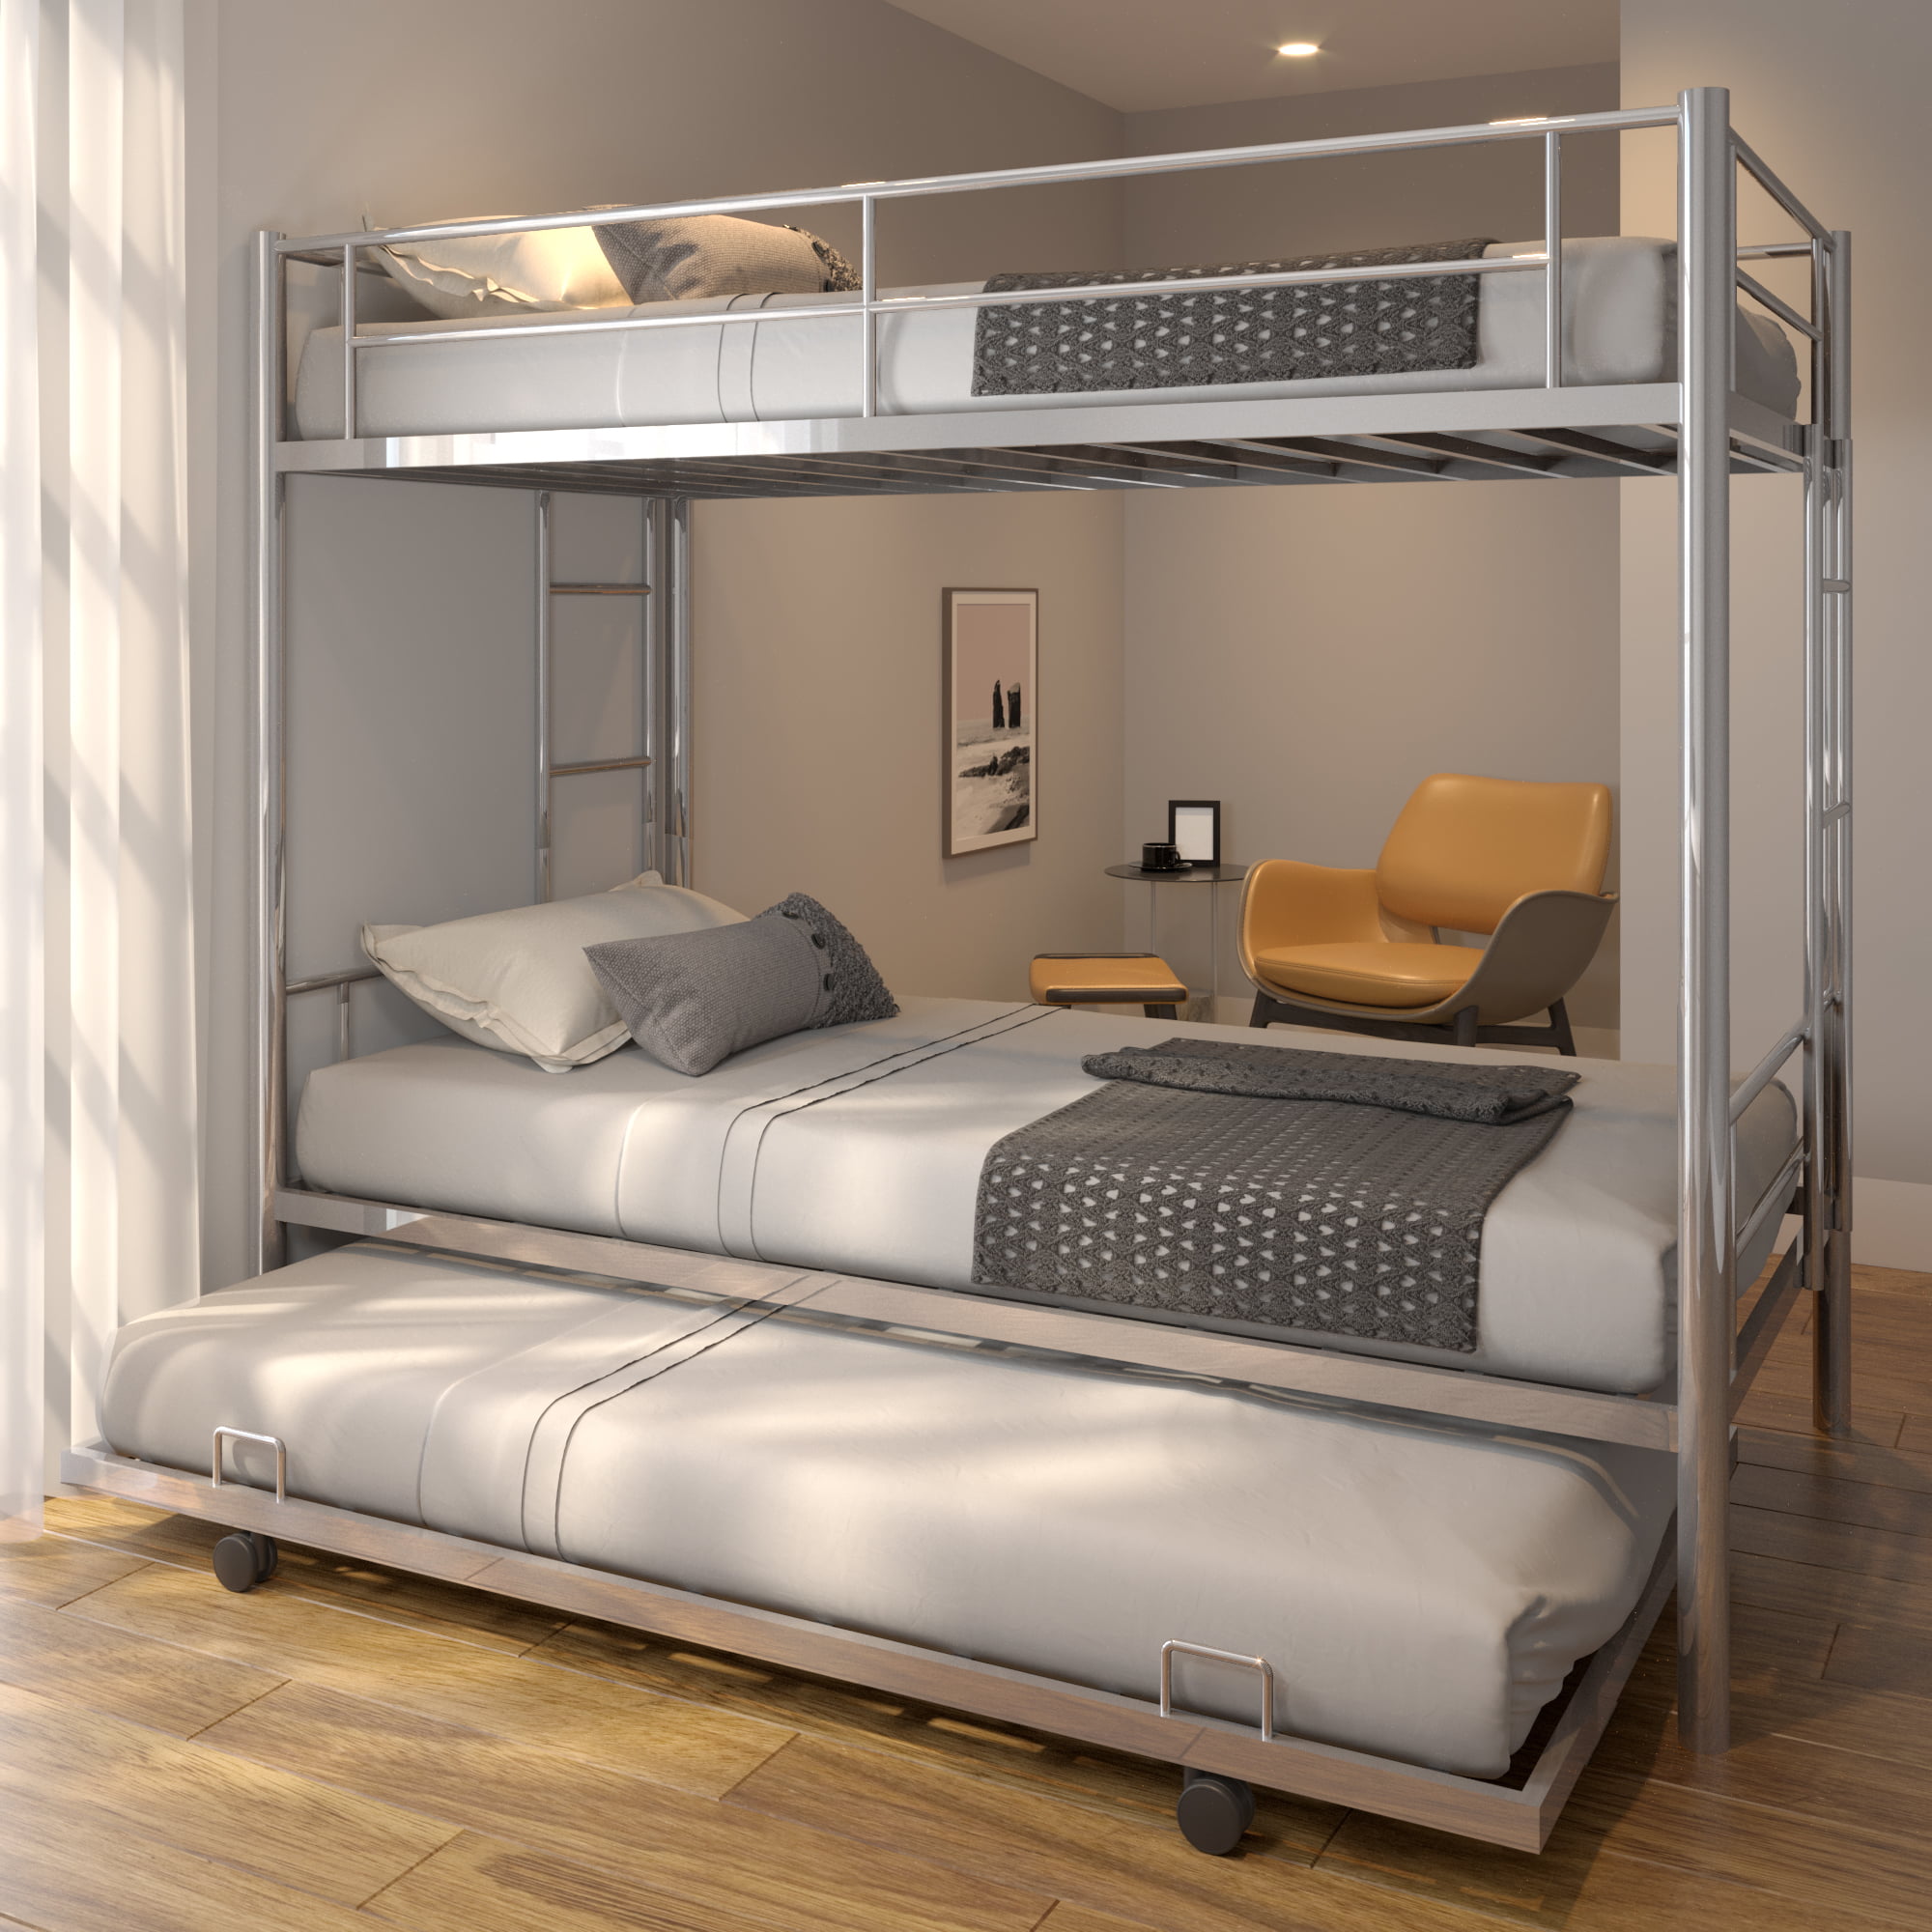 Details about   Twin over Twin Bunk Beds Kids Teens Adult Dorm Bedroom Furniture Metal Frame 